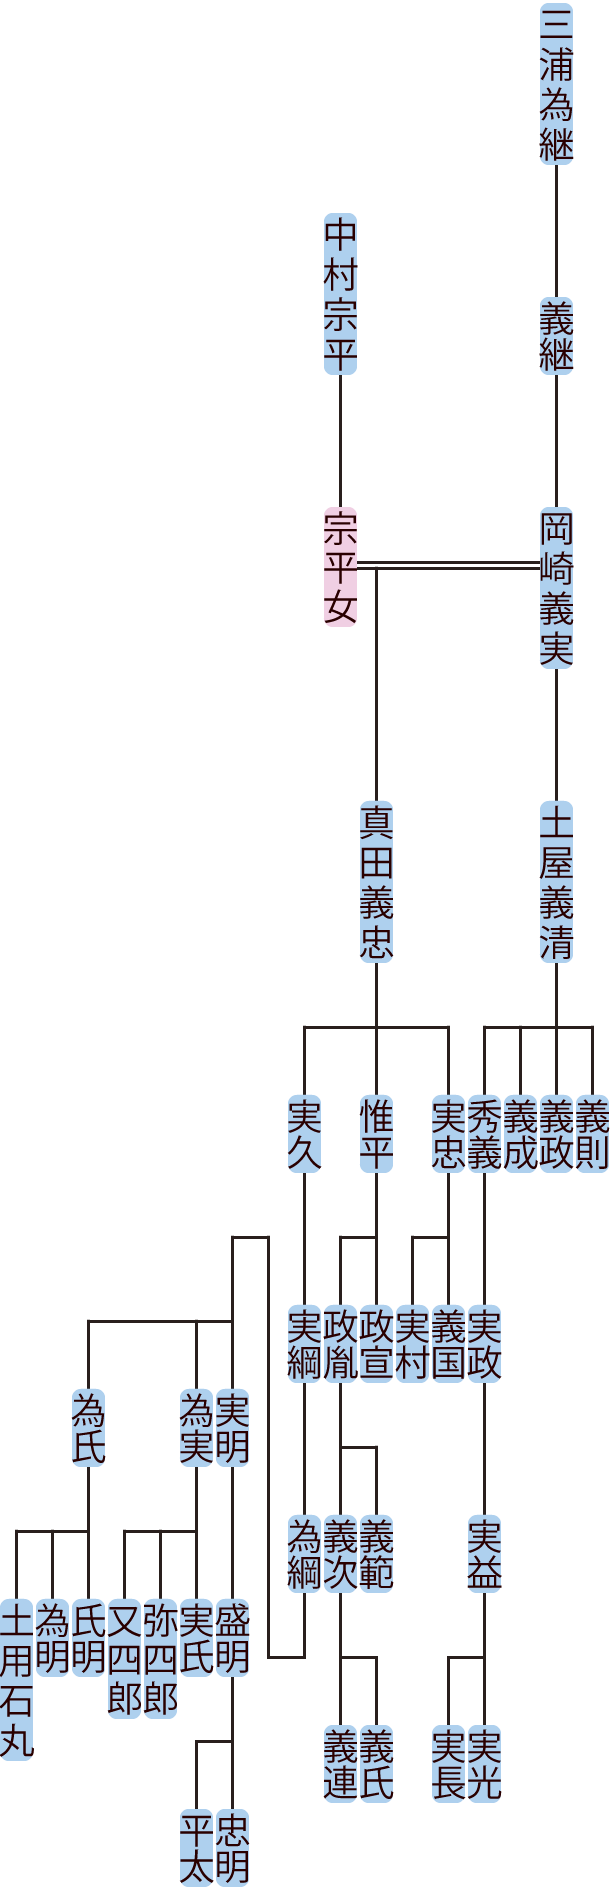 岡崎義実の系図